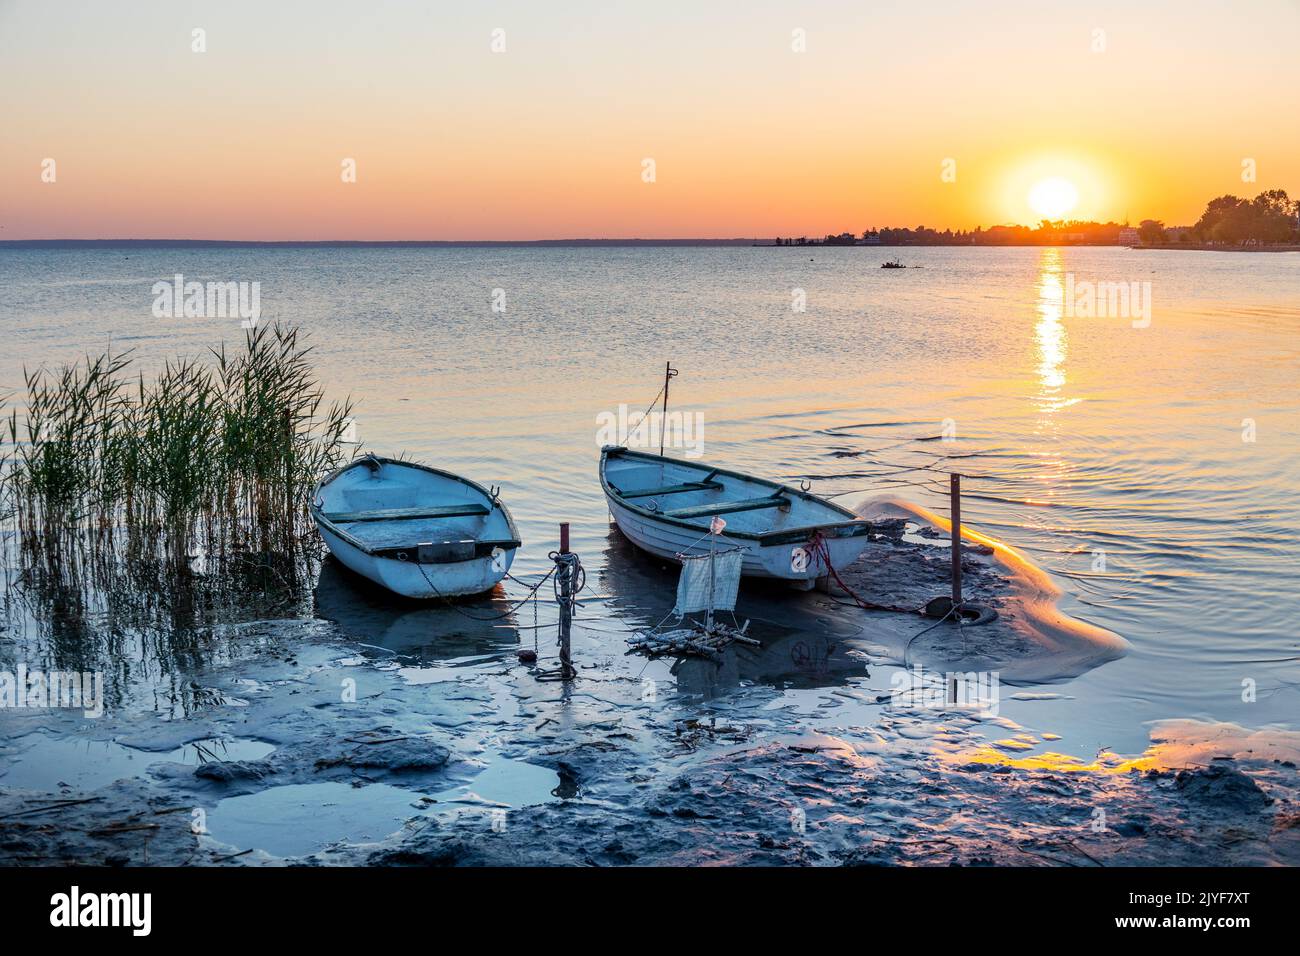 Siofok - rekreační oblast, Jezero Balaton, Maďarsko / Siofok town recreation area, Balaton lake, Hungary, Europe Stock Photo